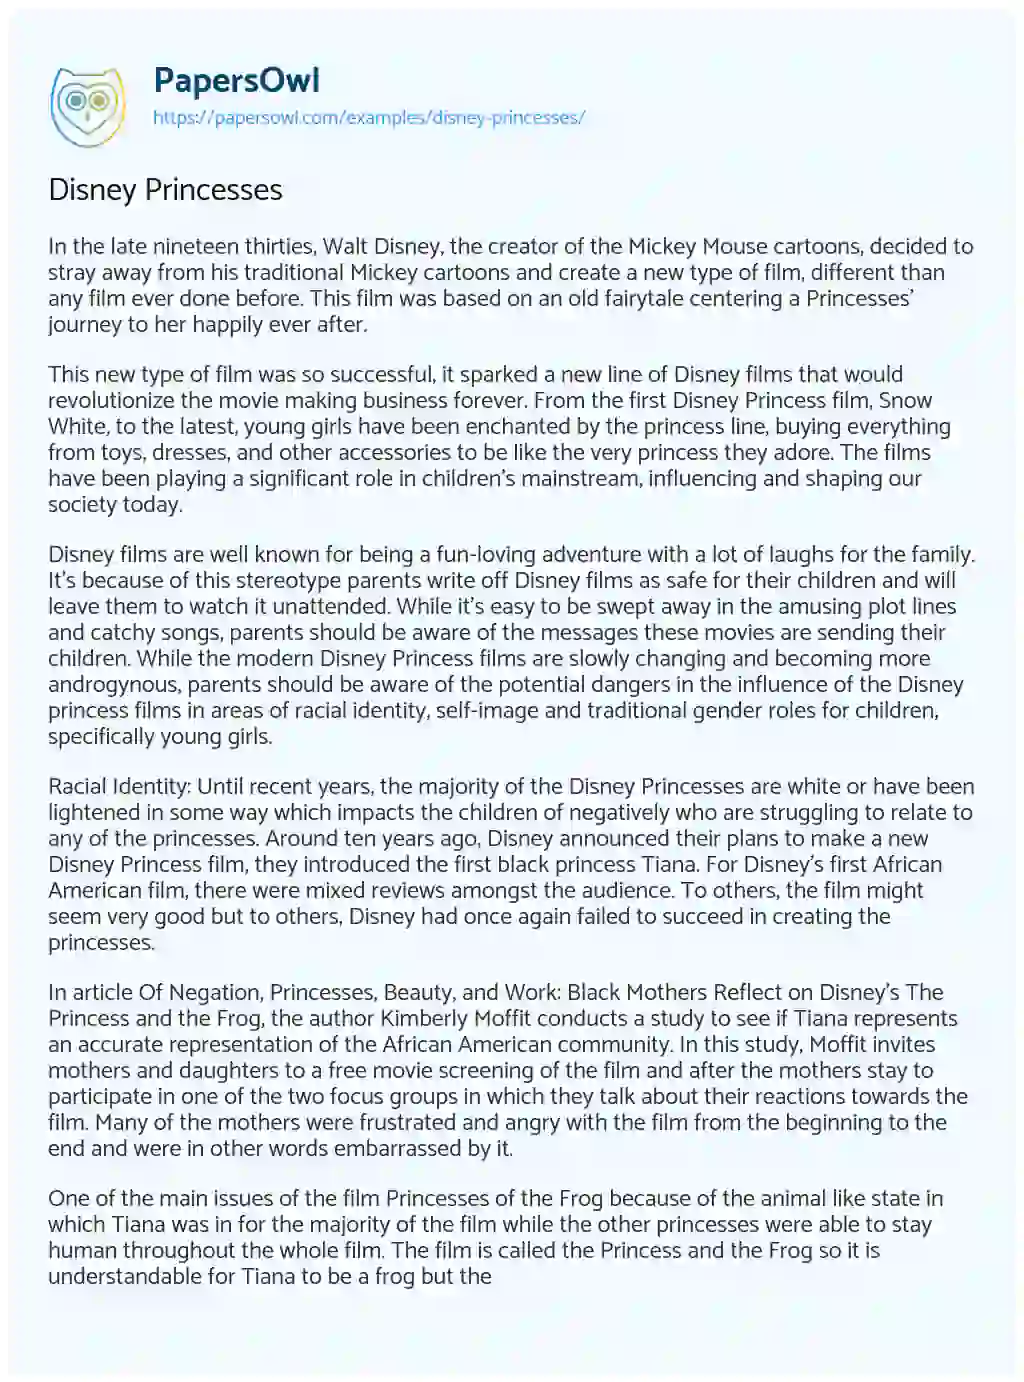 Essay on Disney Princesses